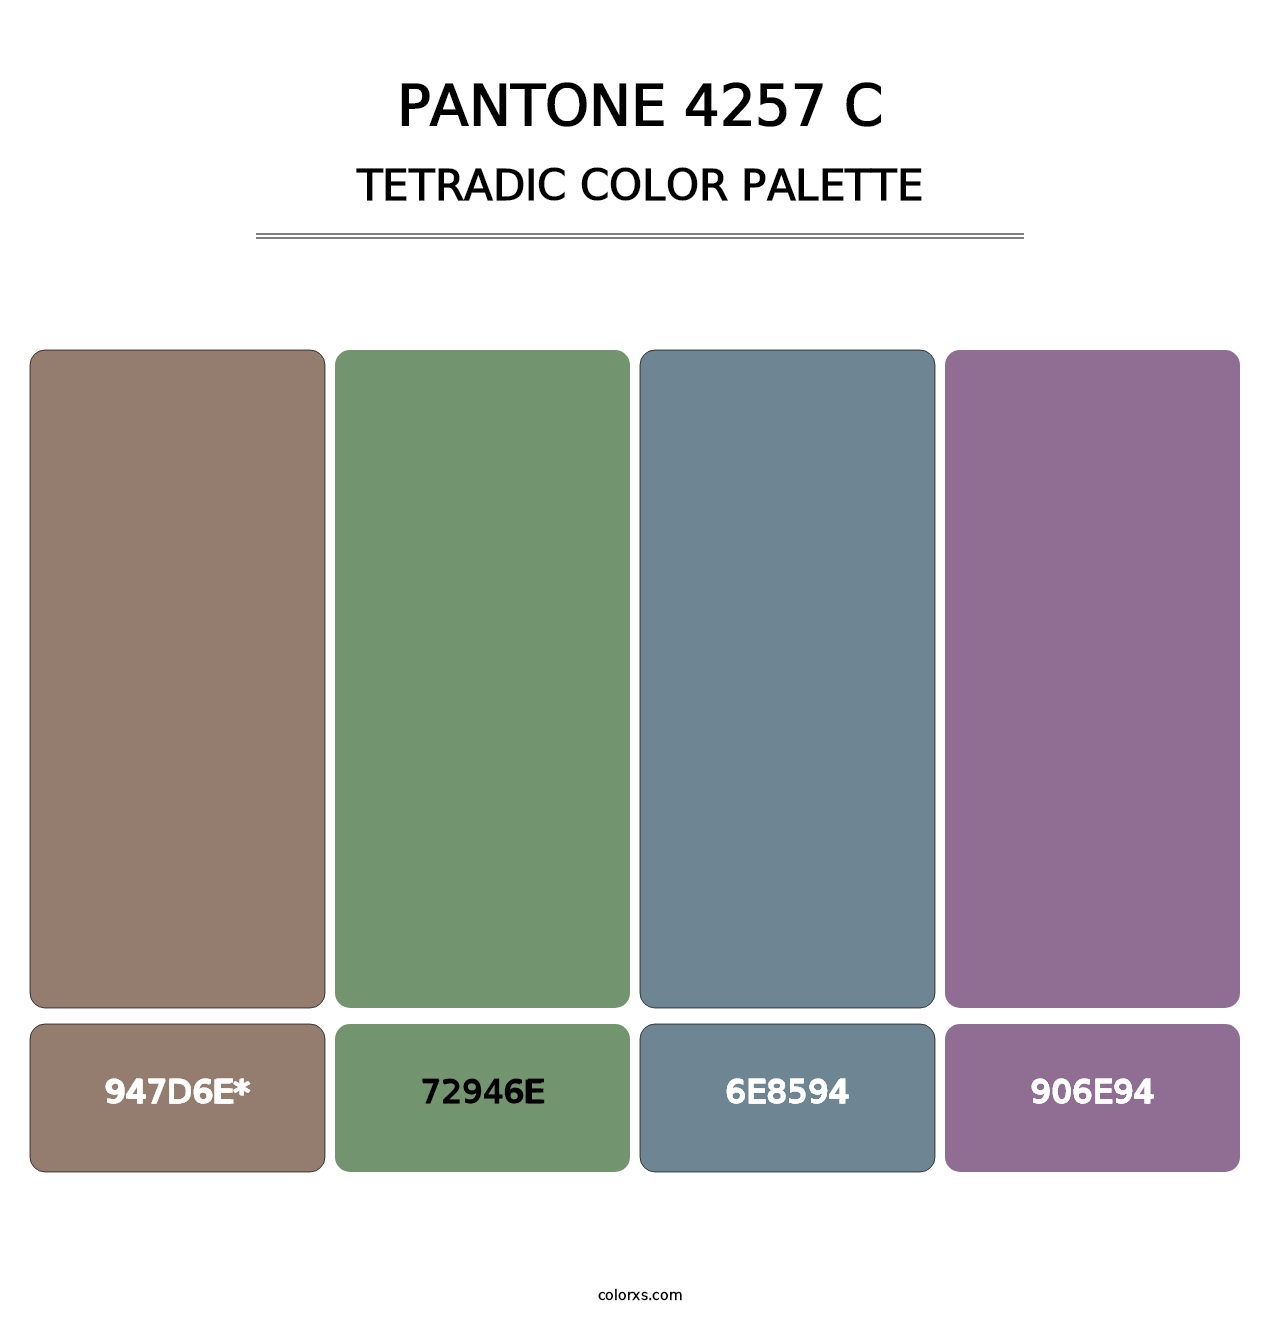 PANTONE 4257 C - Tetradic Color Palette